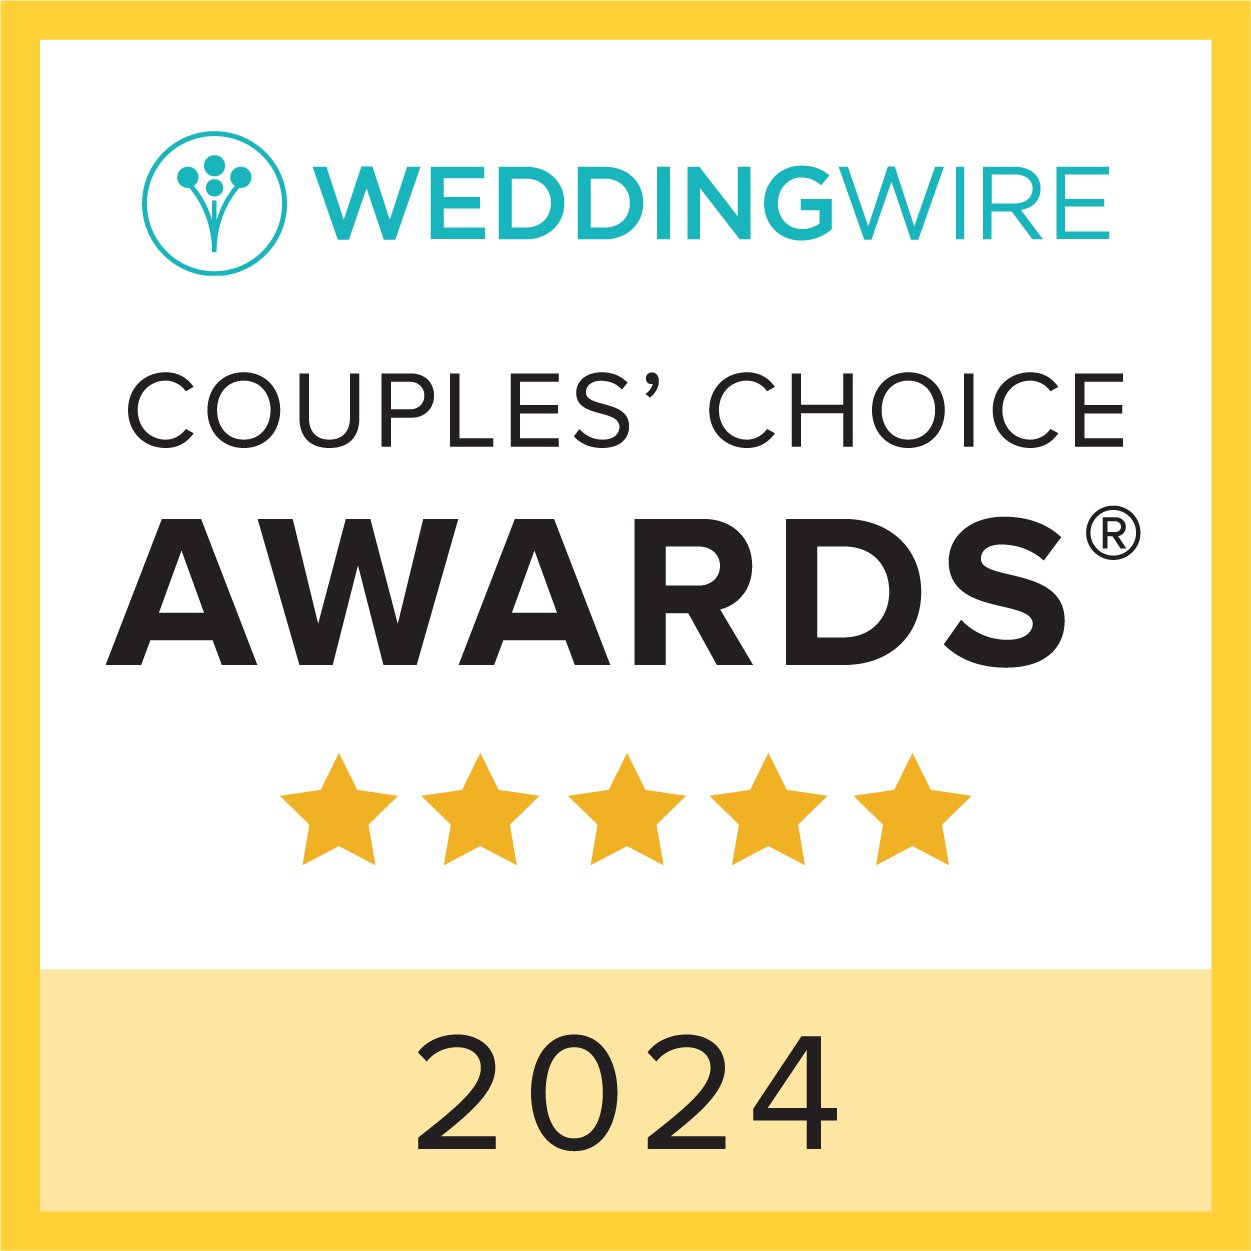 Dj jon don myers is wedding wire couple's choice awards winner 2024.jpg